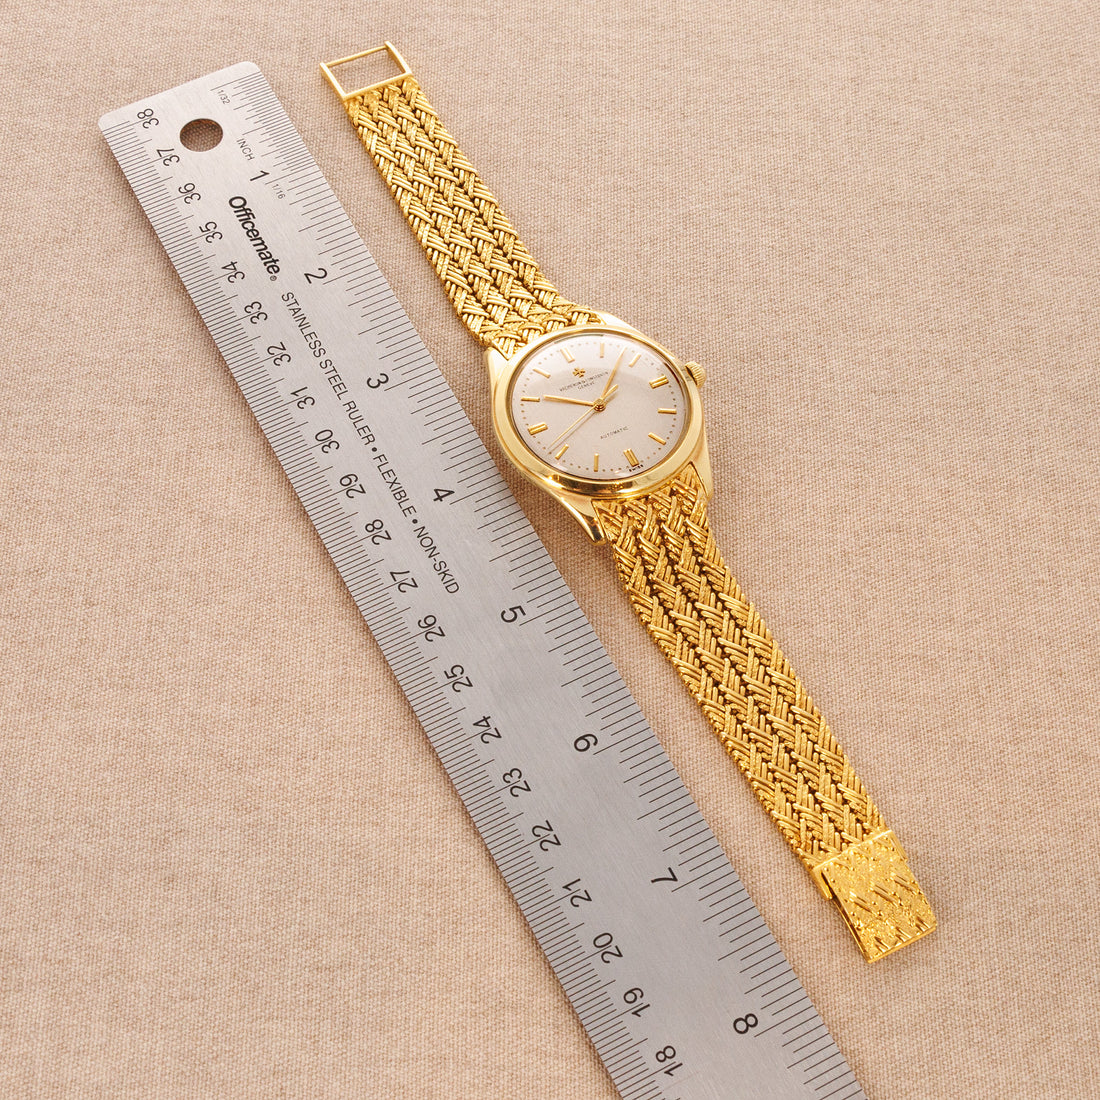 Vacheron Constantin Yellow Gold Bracelet Watch Ref. 4870